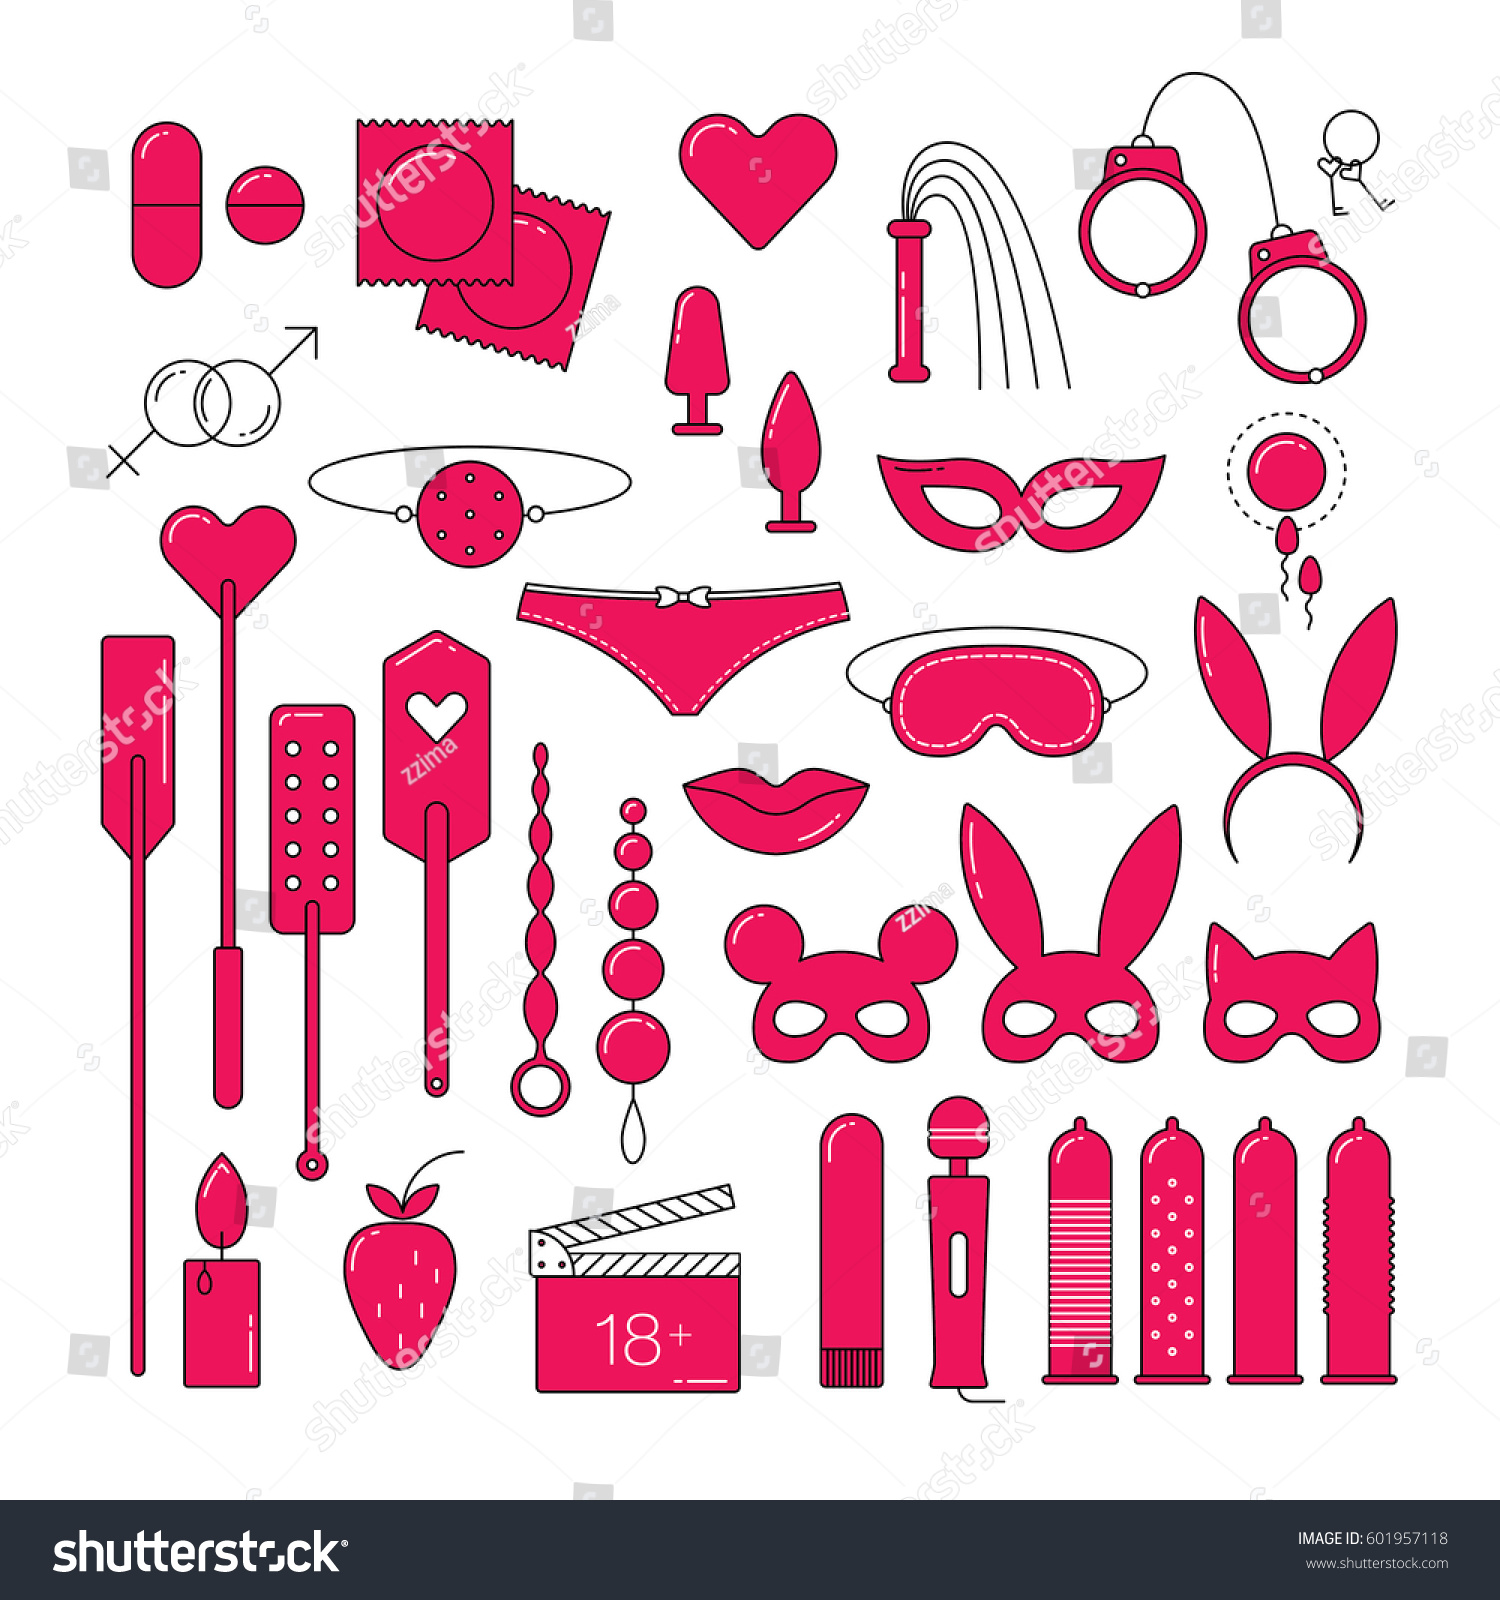 Bdsm Sex Set Icons Linear Design Stock Vector Royalty Free 601957118 Shutterstock 4941